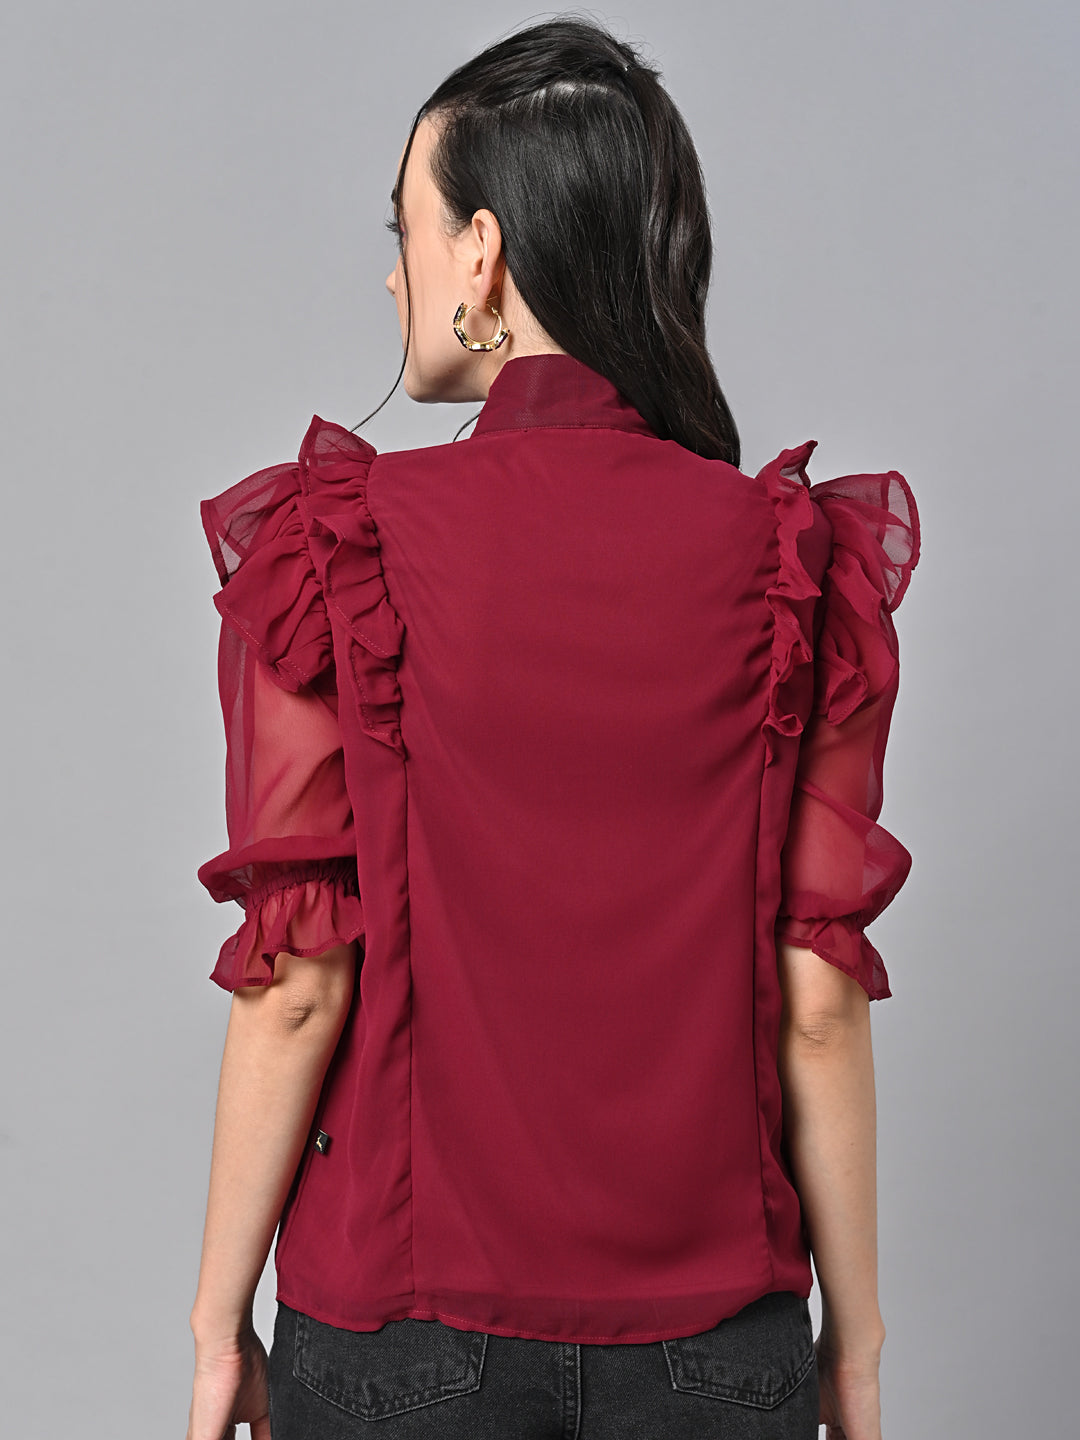 Valbone Women’s Red Georgette Floral Solid Top With Half-Sleeves